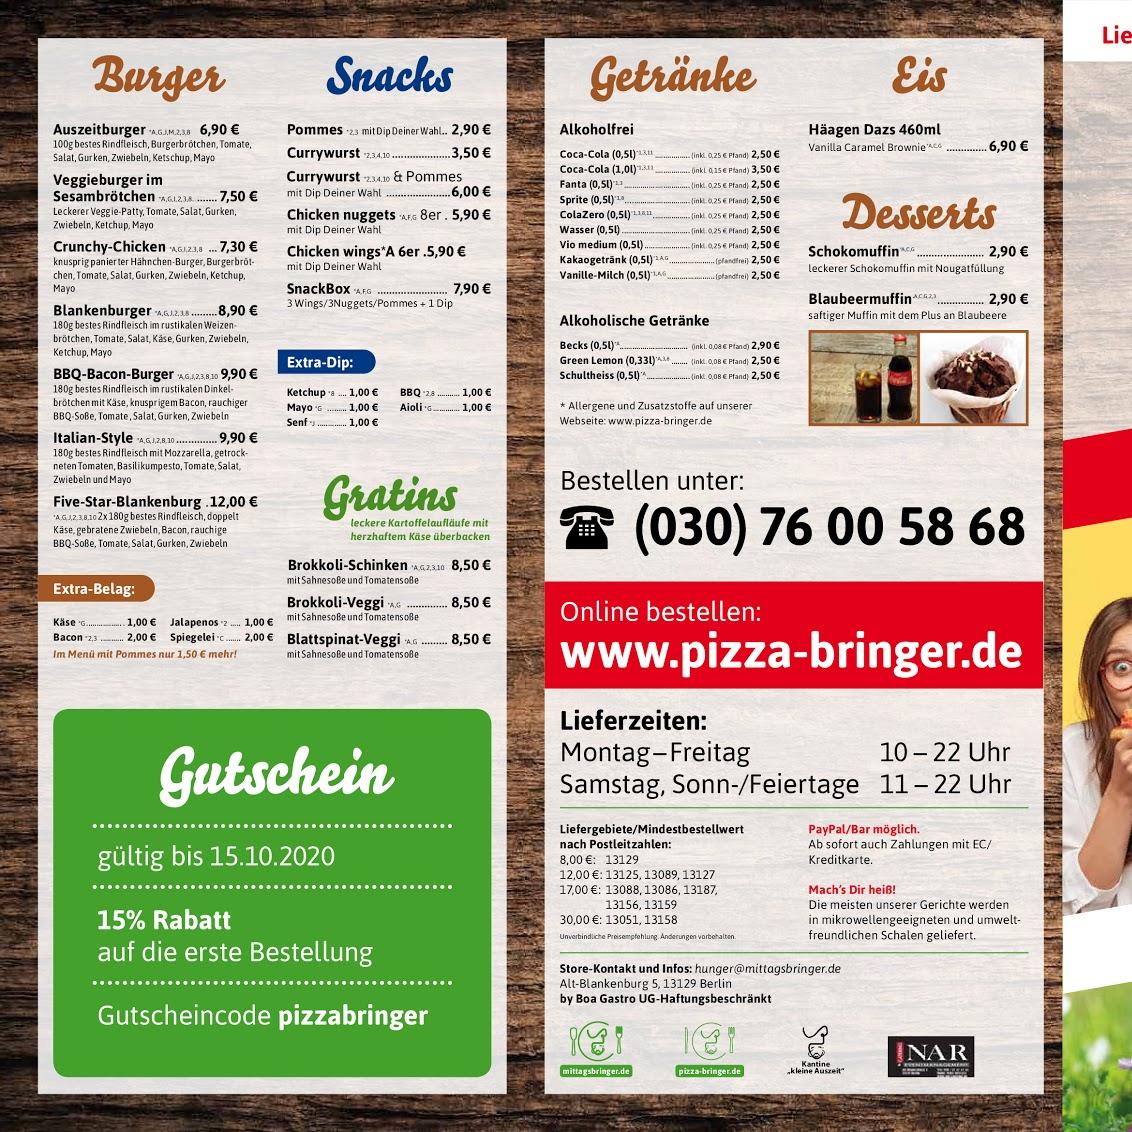 Restaurant "pizza-bringer" in Berlin